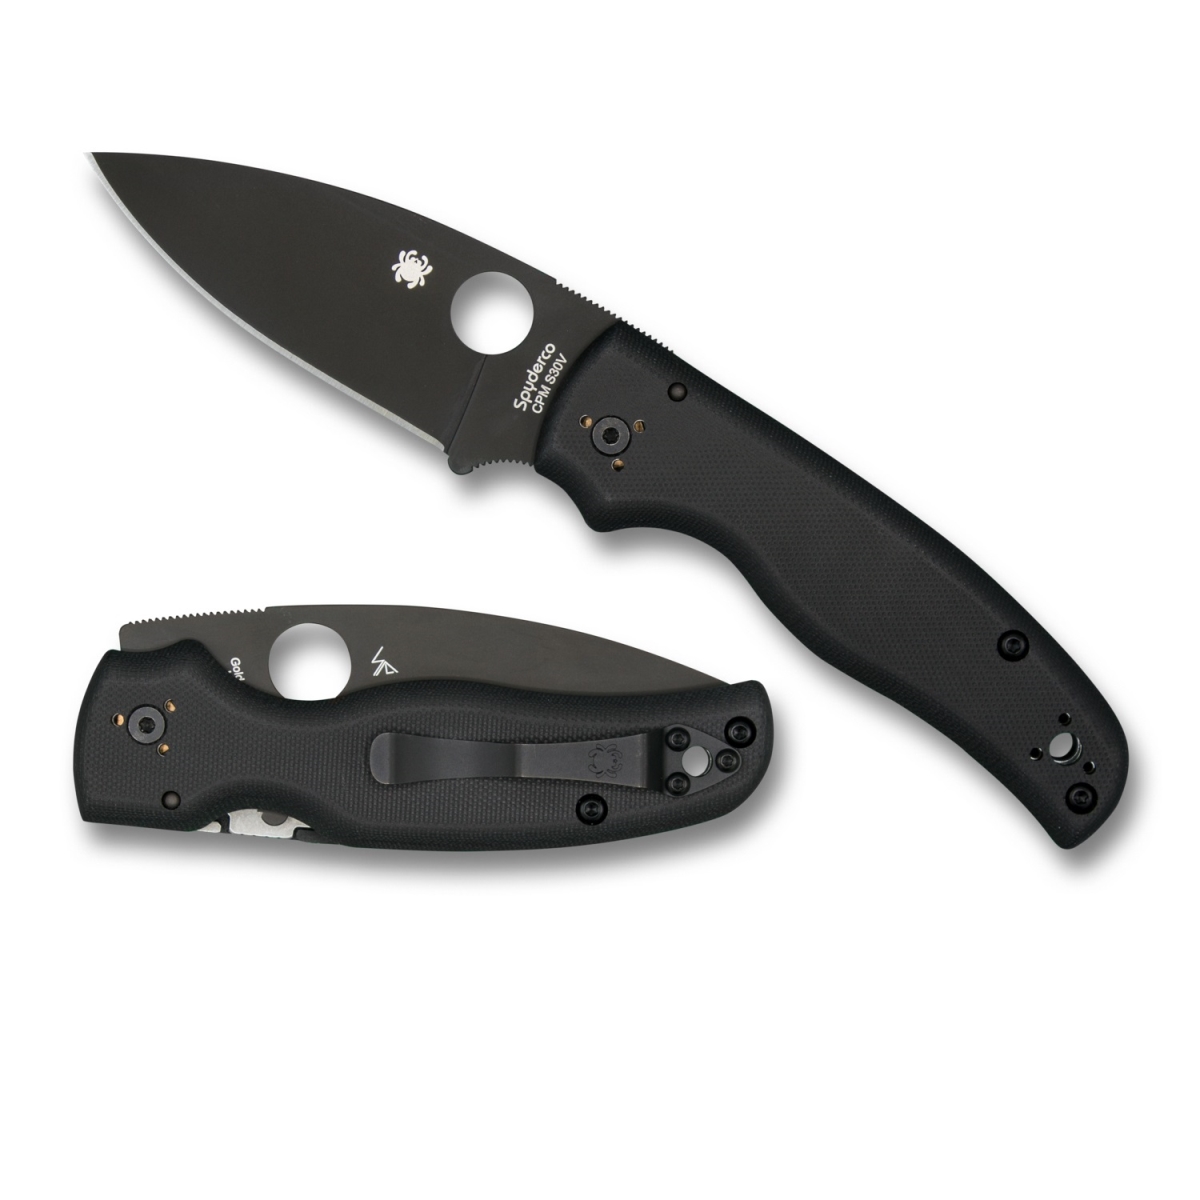 4015999 3.61 in. Shaman Folder Knife with Plain G-10 Handle, Black -  SPYDERCO